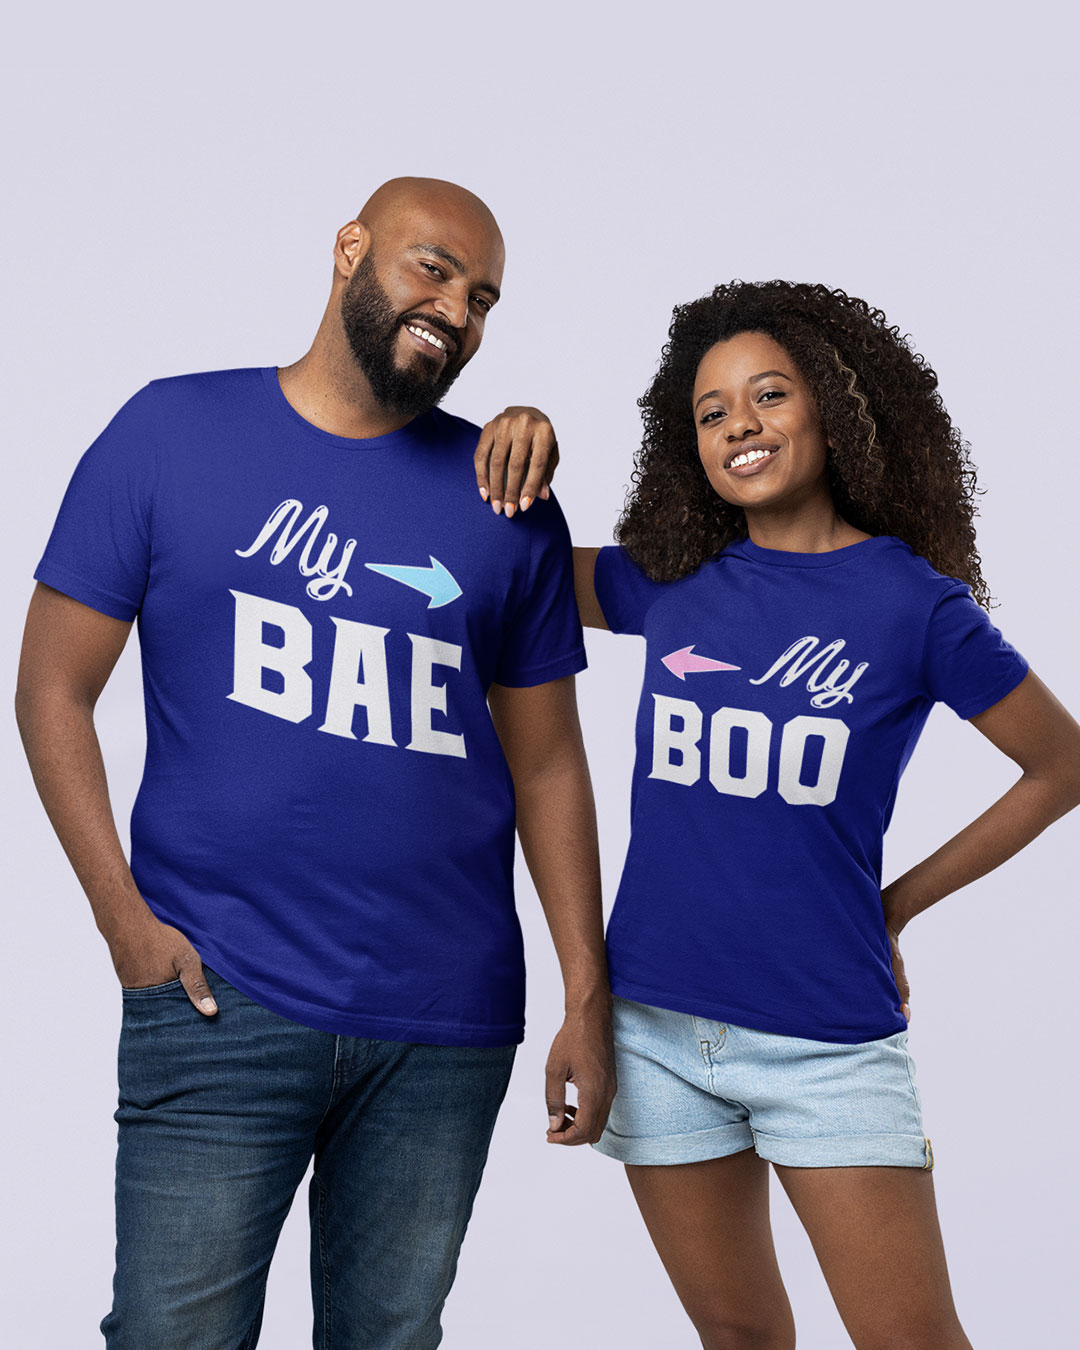 My Bae & My Boo Couple valentine T-shirts